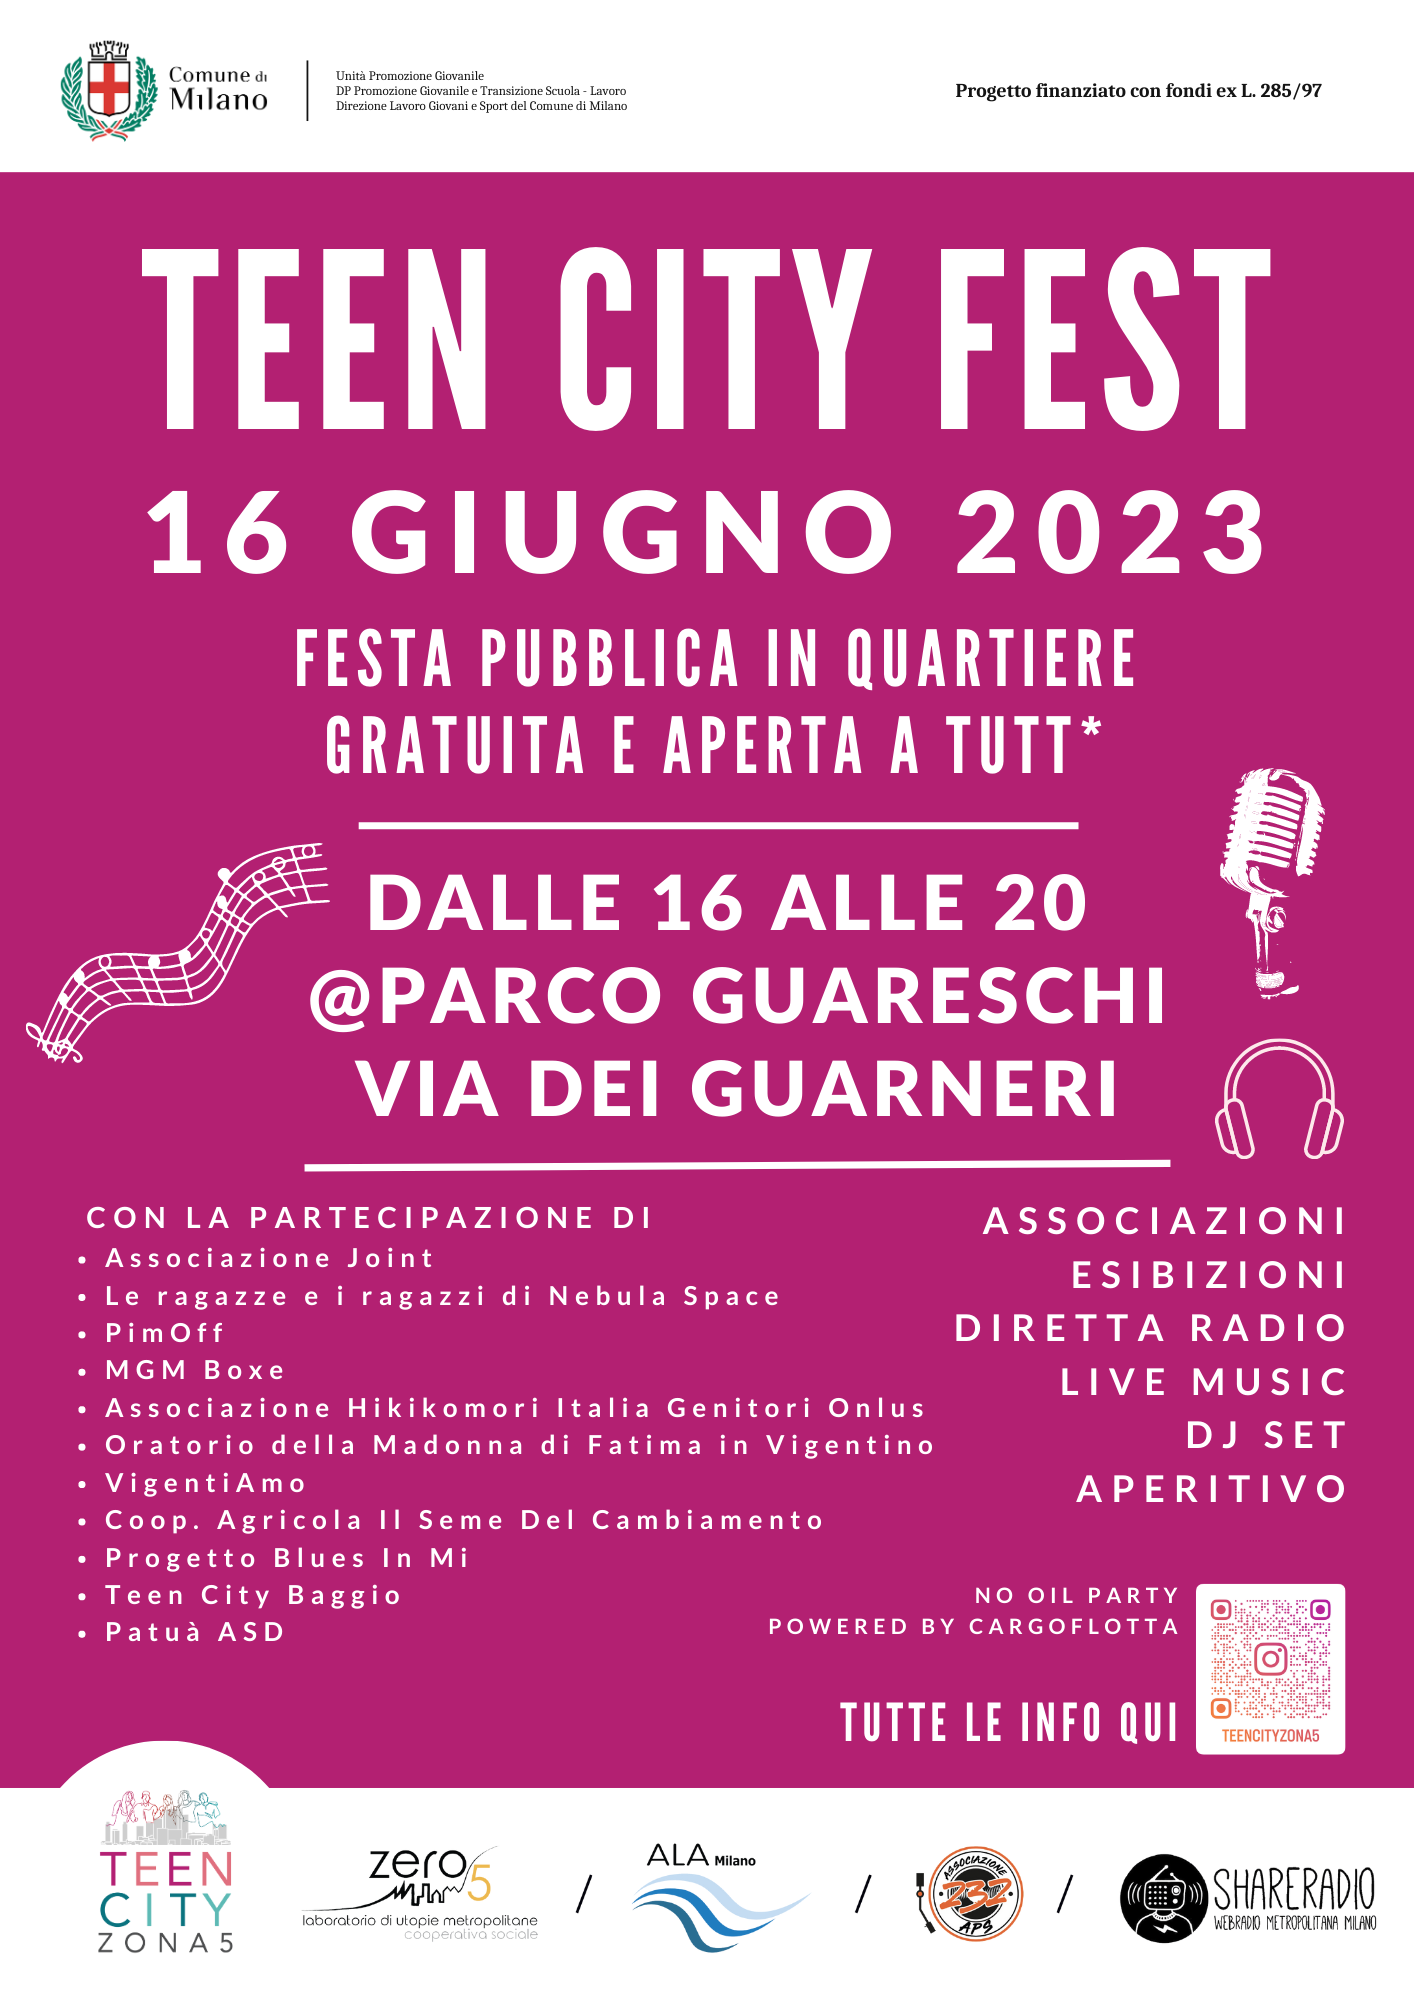 #teencityfest